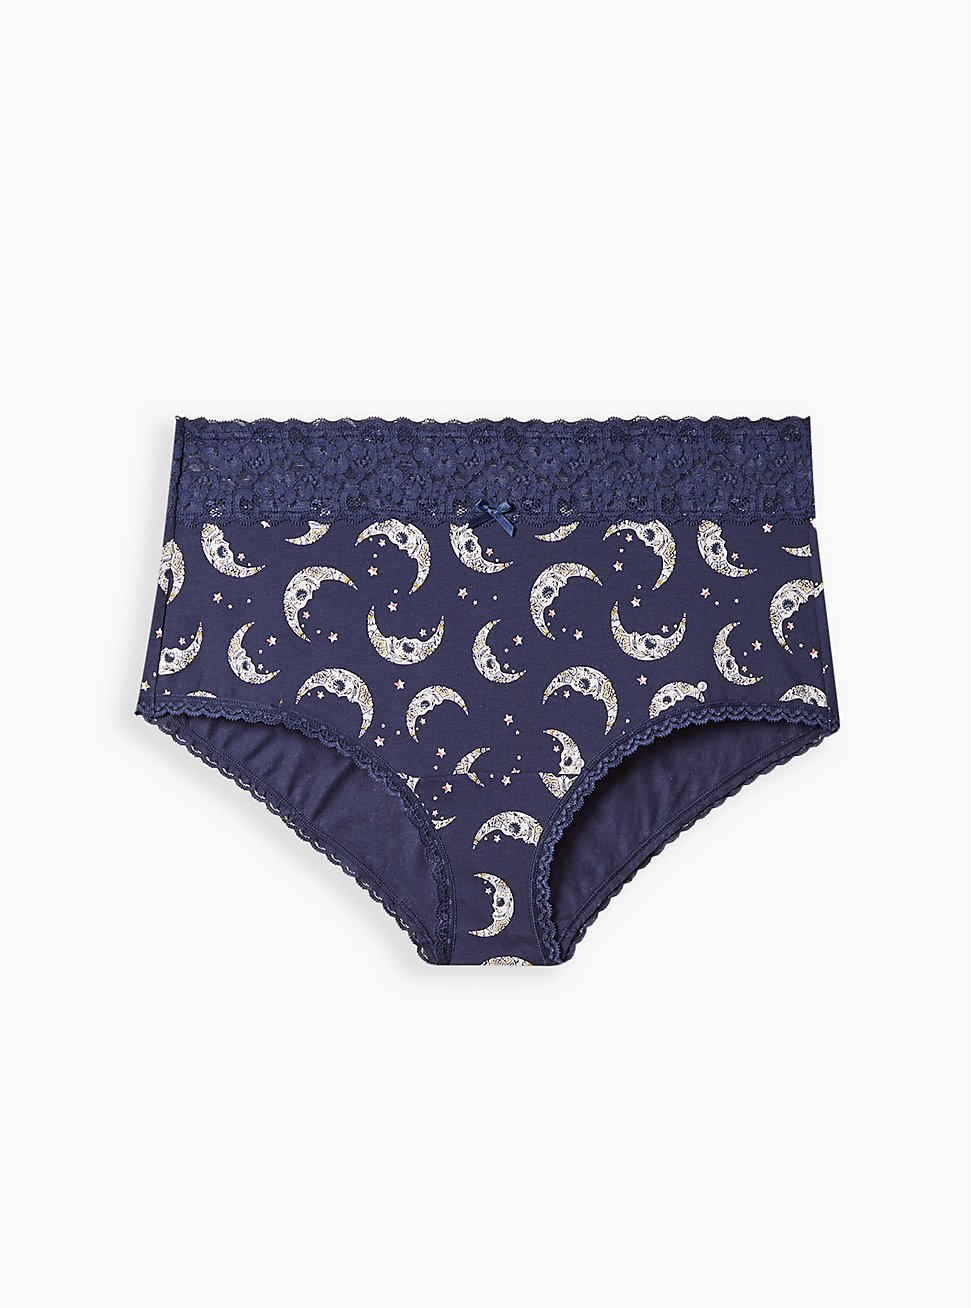 Wide Lace Cotton Brief Panty - Navy Moons , MUERTOS MOONS- Navy, hi-res